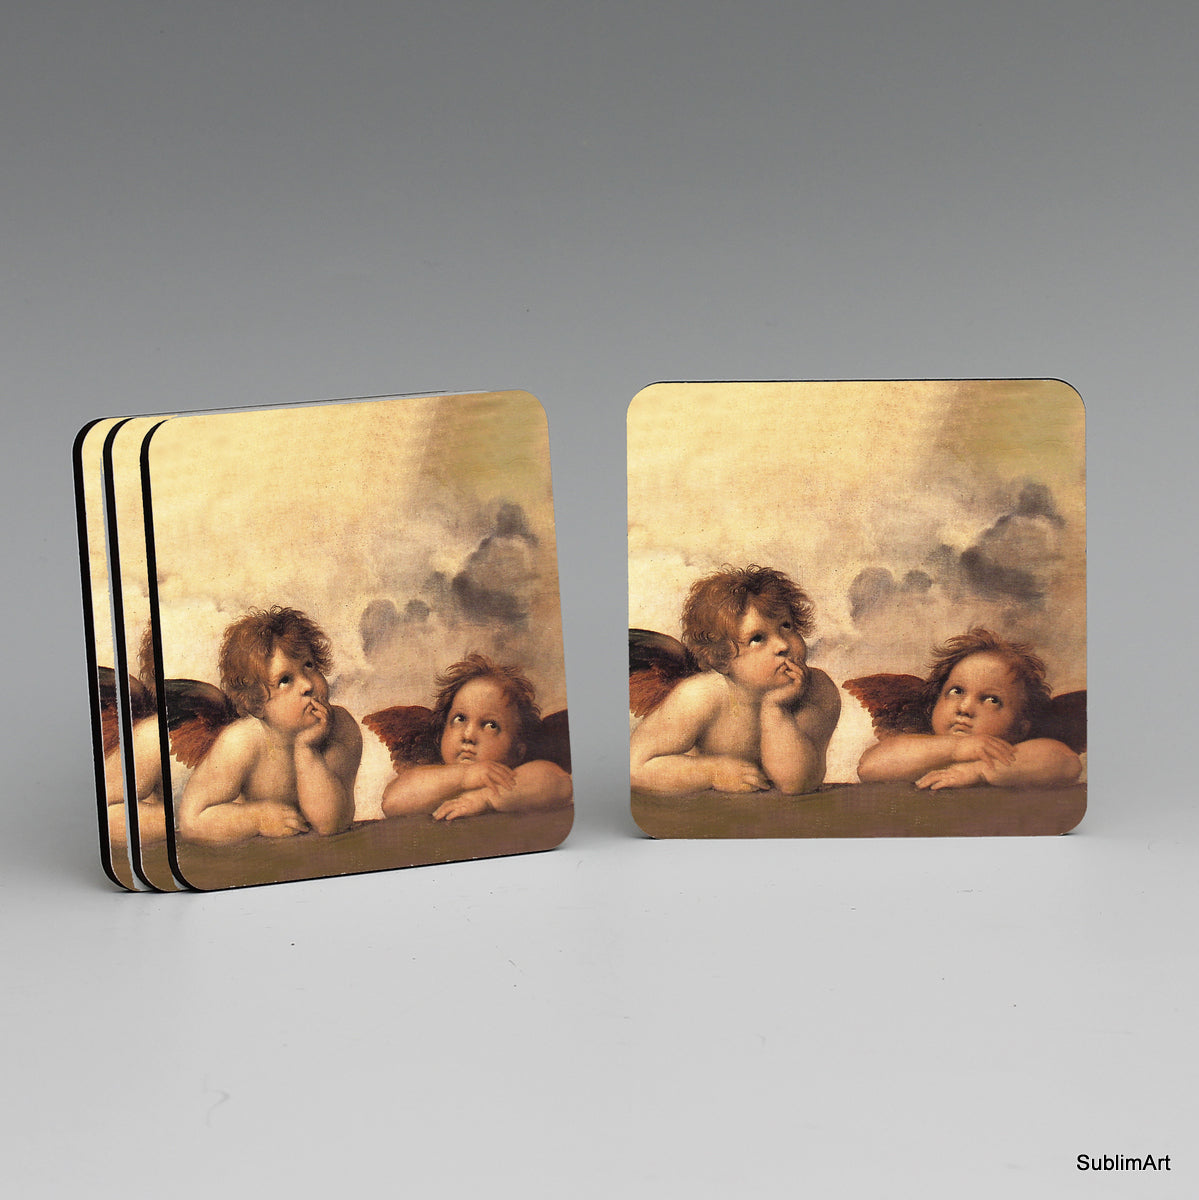 SUBLIMART: MDF Hardboard Set of 4 Coasters - Design: Affresco Putti, detail from The Sistine Madonna" by Raphael